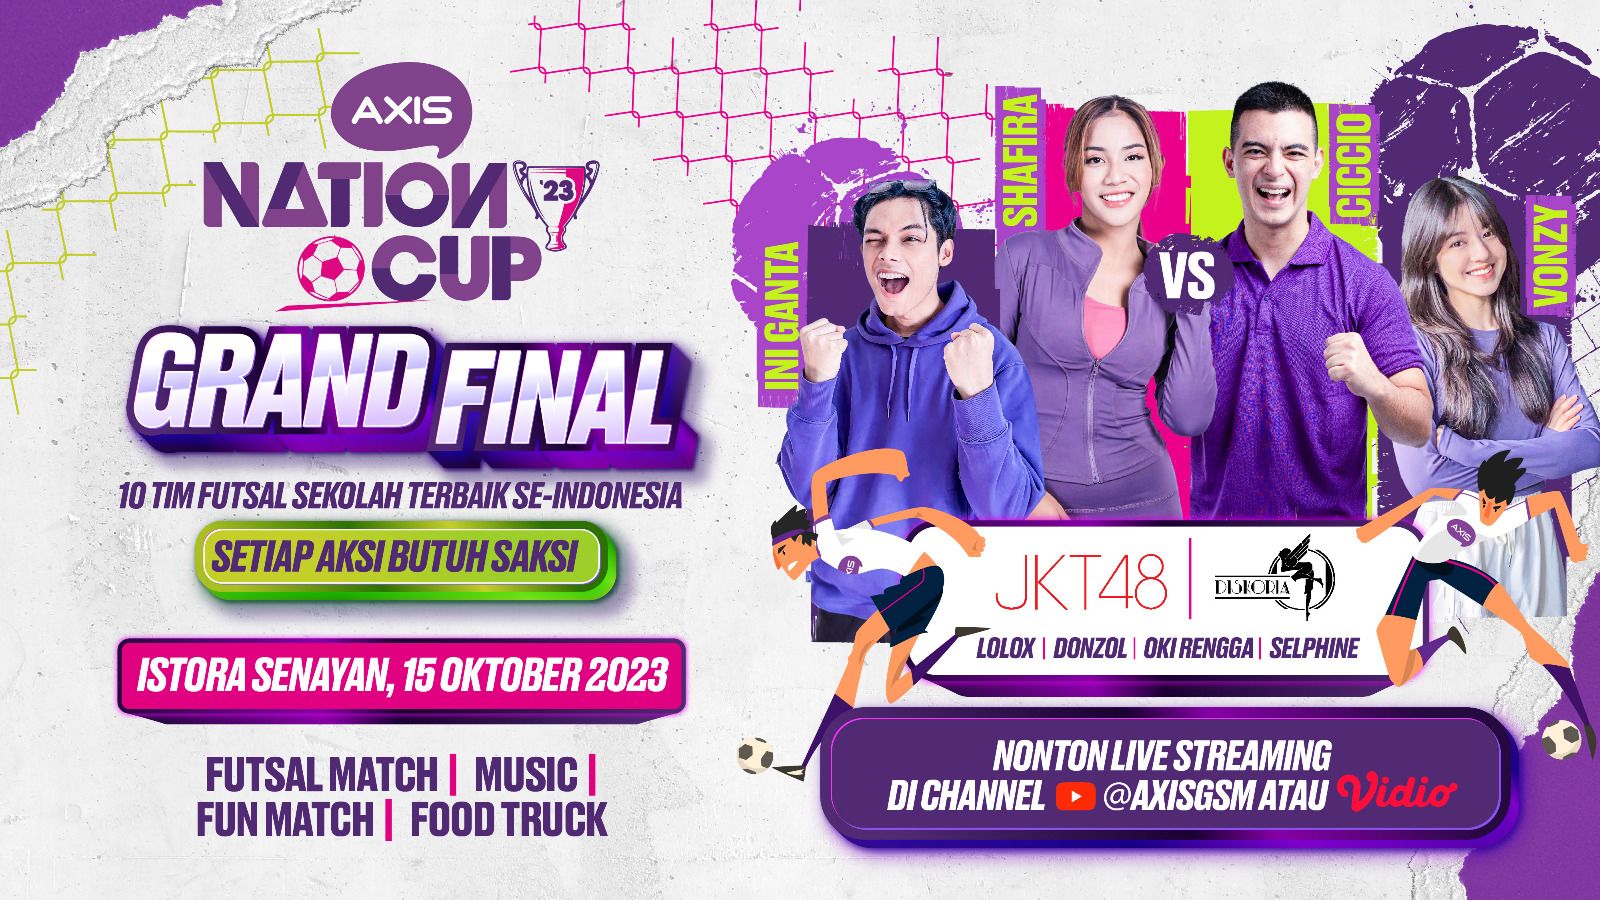 Grand Final AXIS Nation akan digelar di Istora Senayan, Jakarta, Minggu, 15 Oktober 2023. (Dok. AXIS Nation Cup)